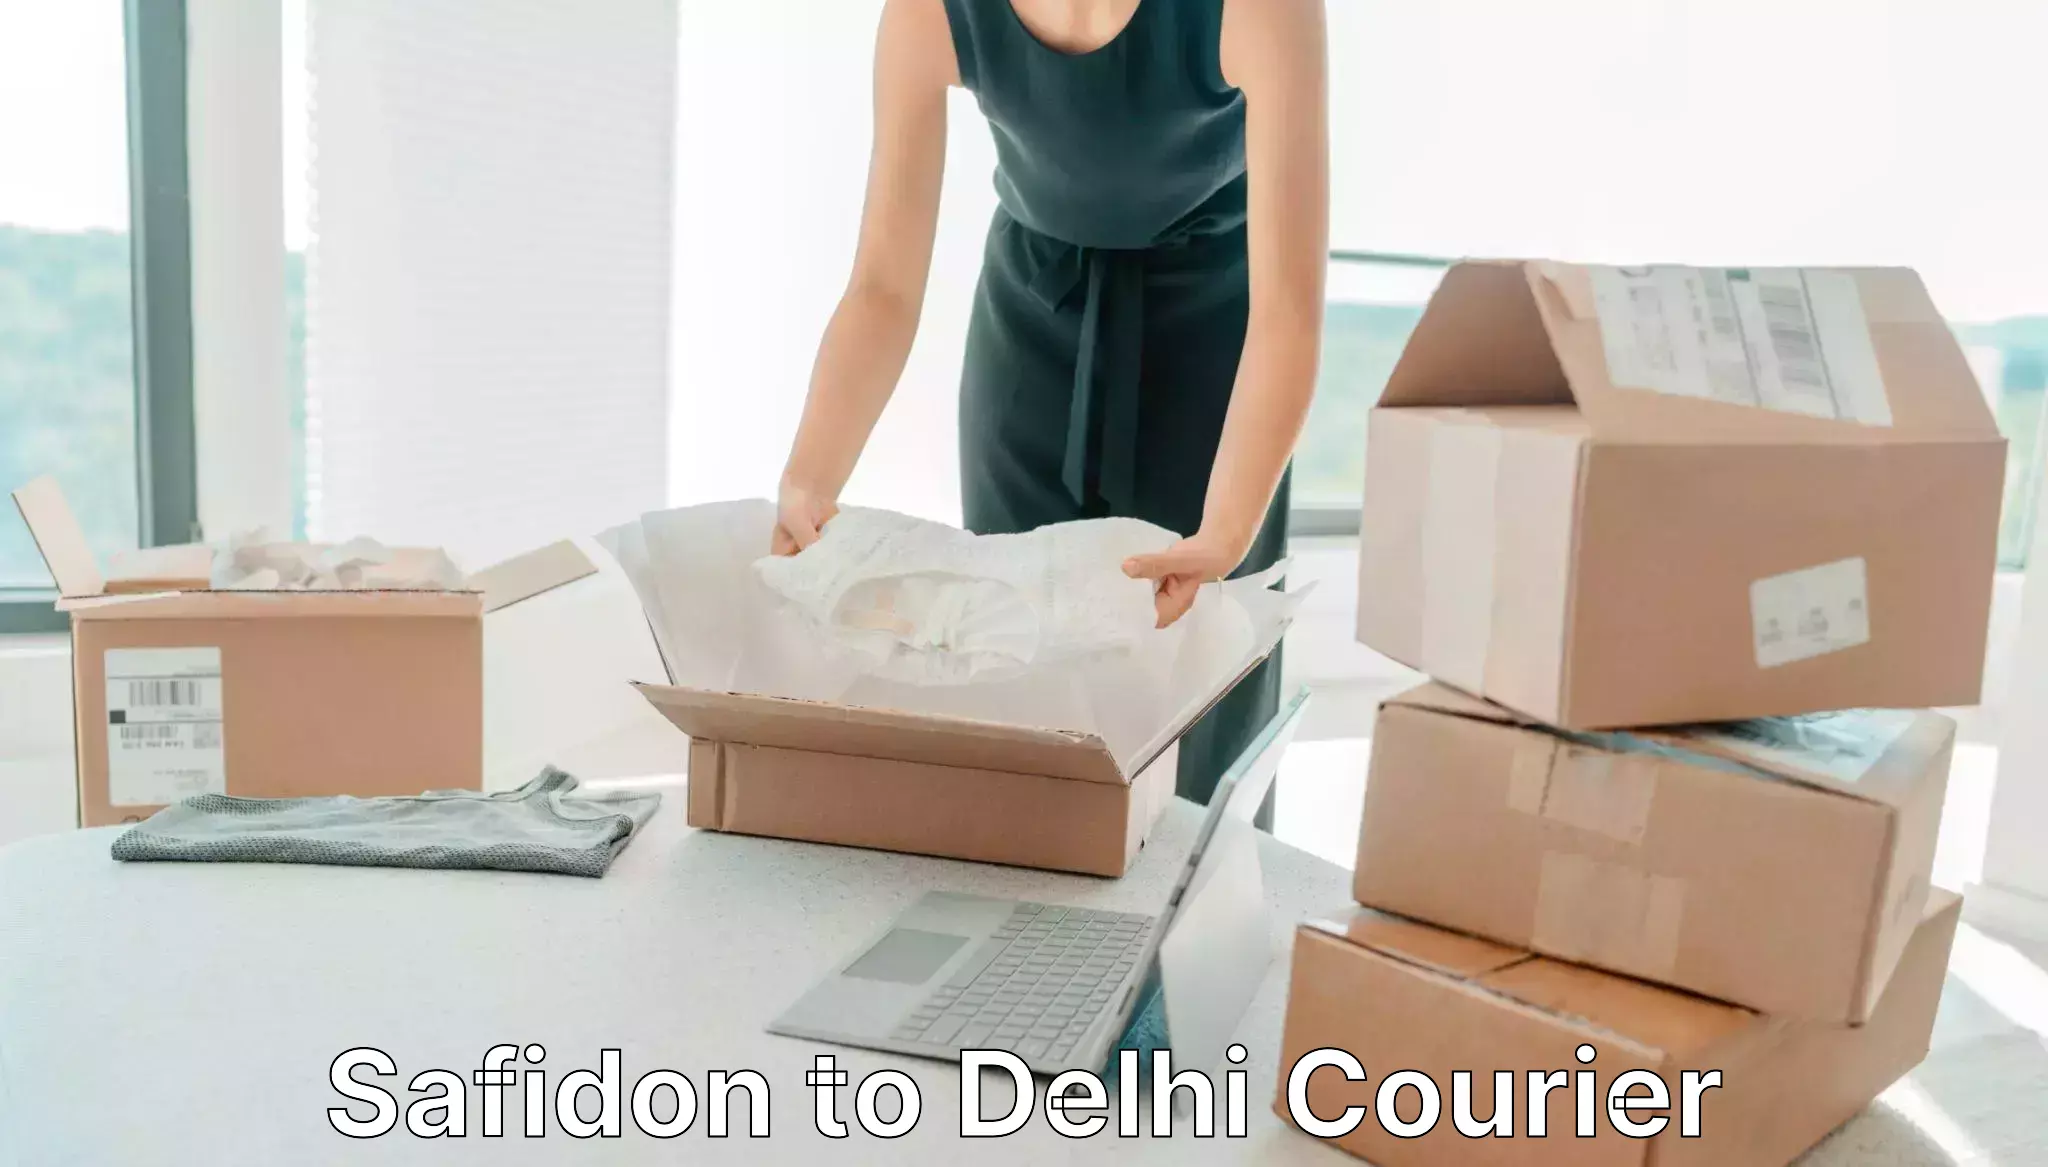 24-hour courier service Safidon to East Delhi